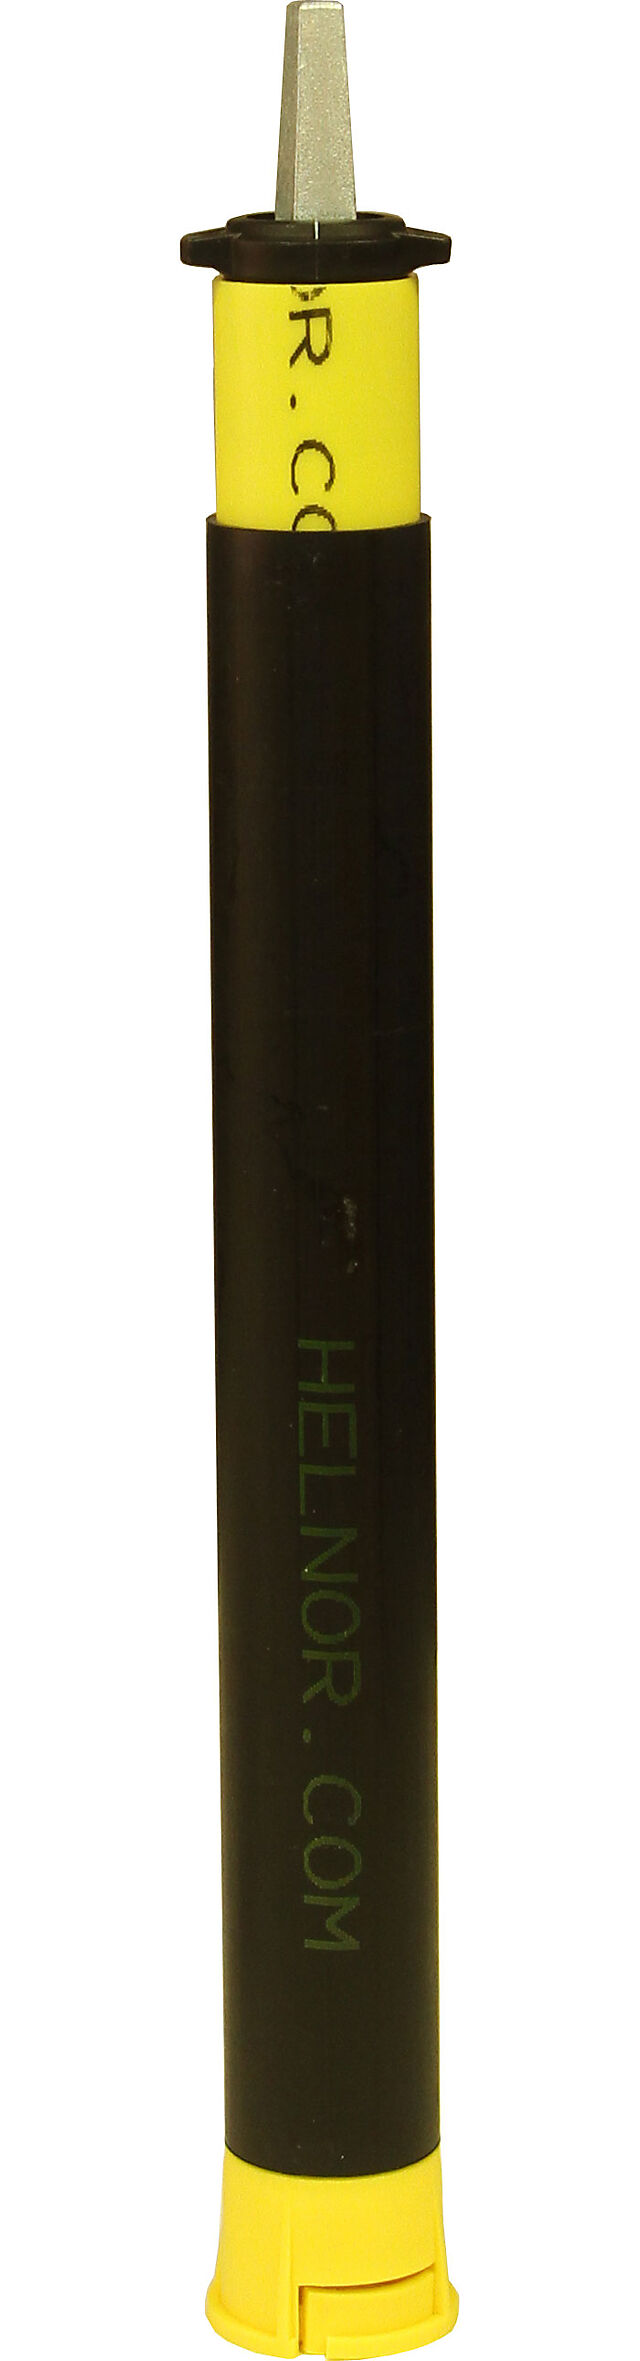 Helnor Spindelforlenger 1,25 - 2,23 m XS2 Helnor 1